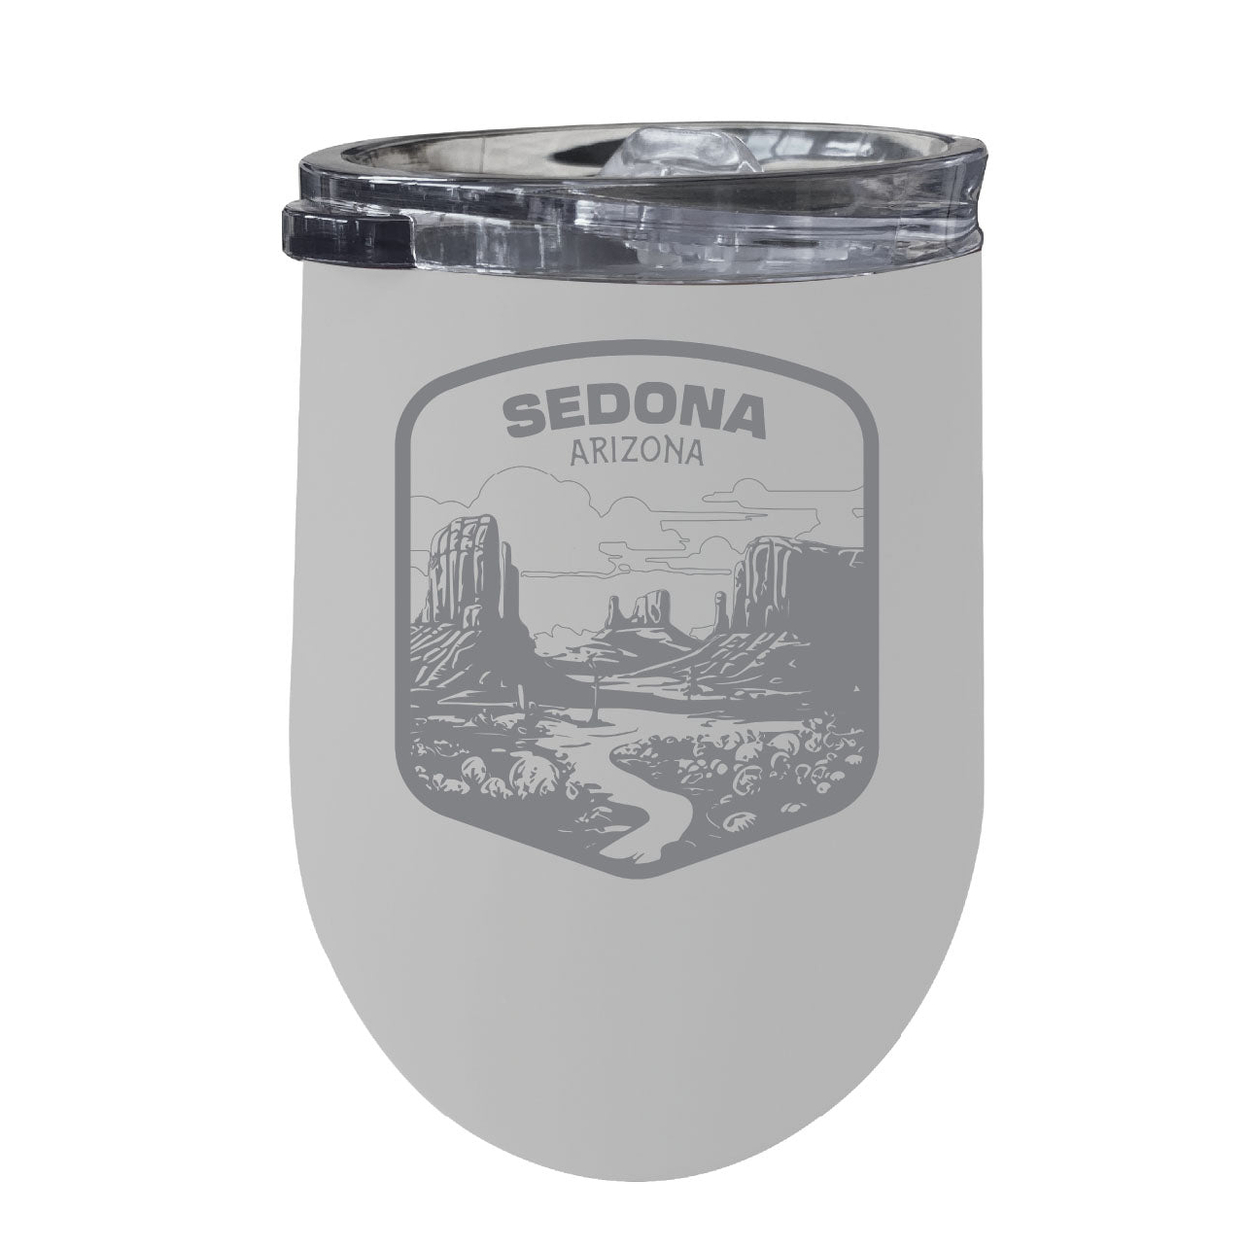 Sedona Arizona Souvenir 12 Oz Engraved Insulated Wine Stainless Steel Tumbler - White,,4-Pack